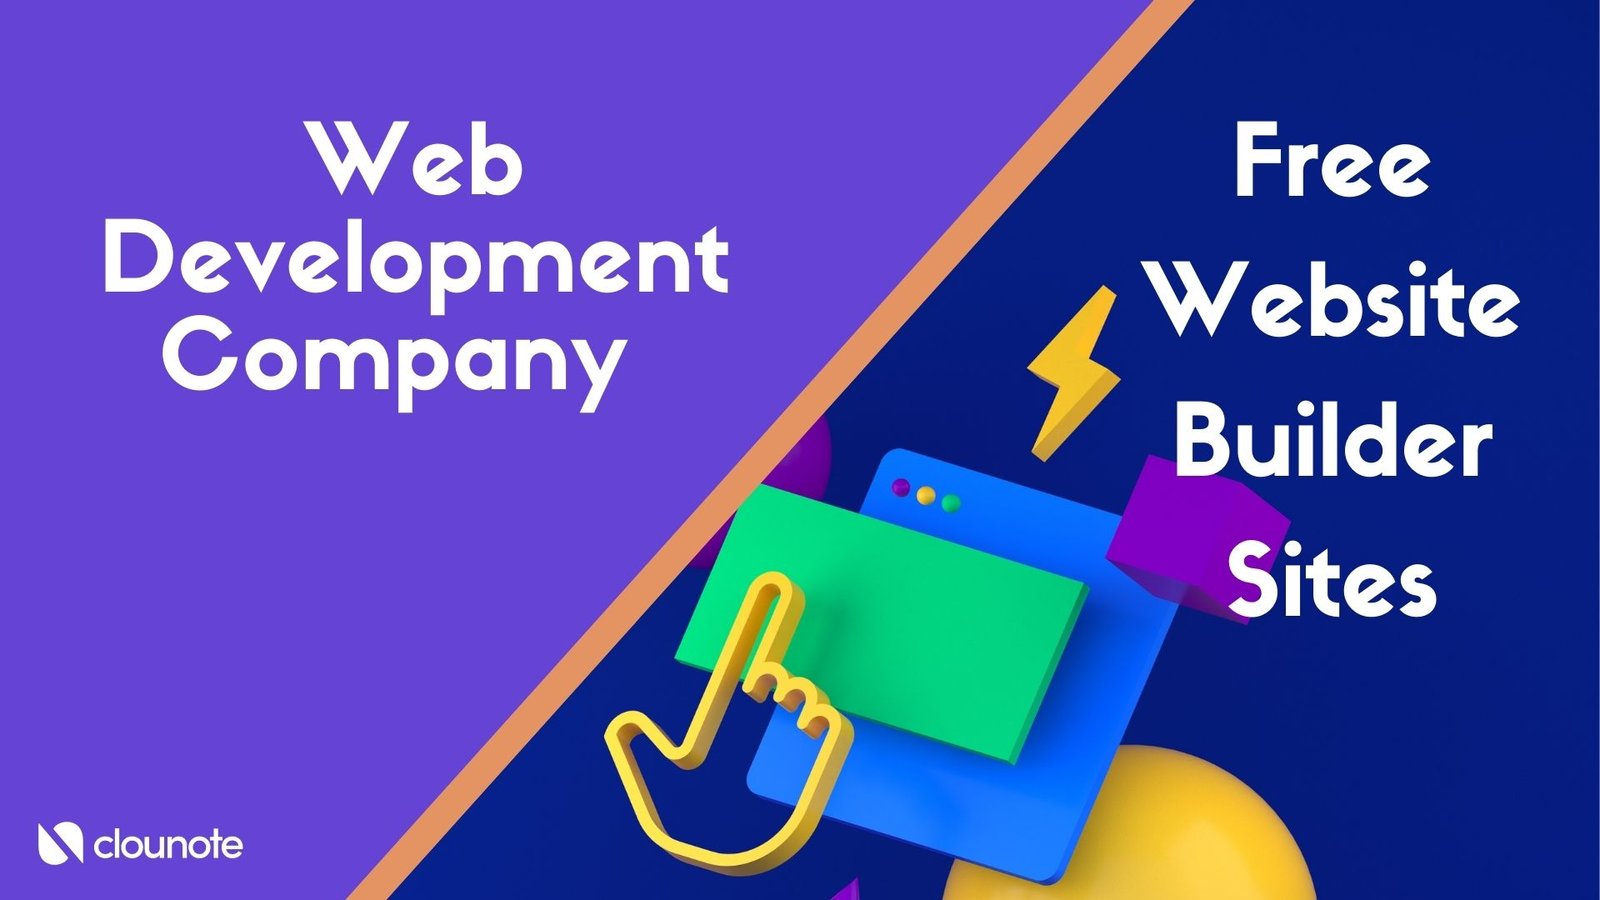 Web Development Company v/s Free Website Builder Sites